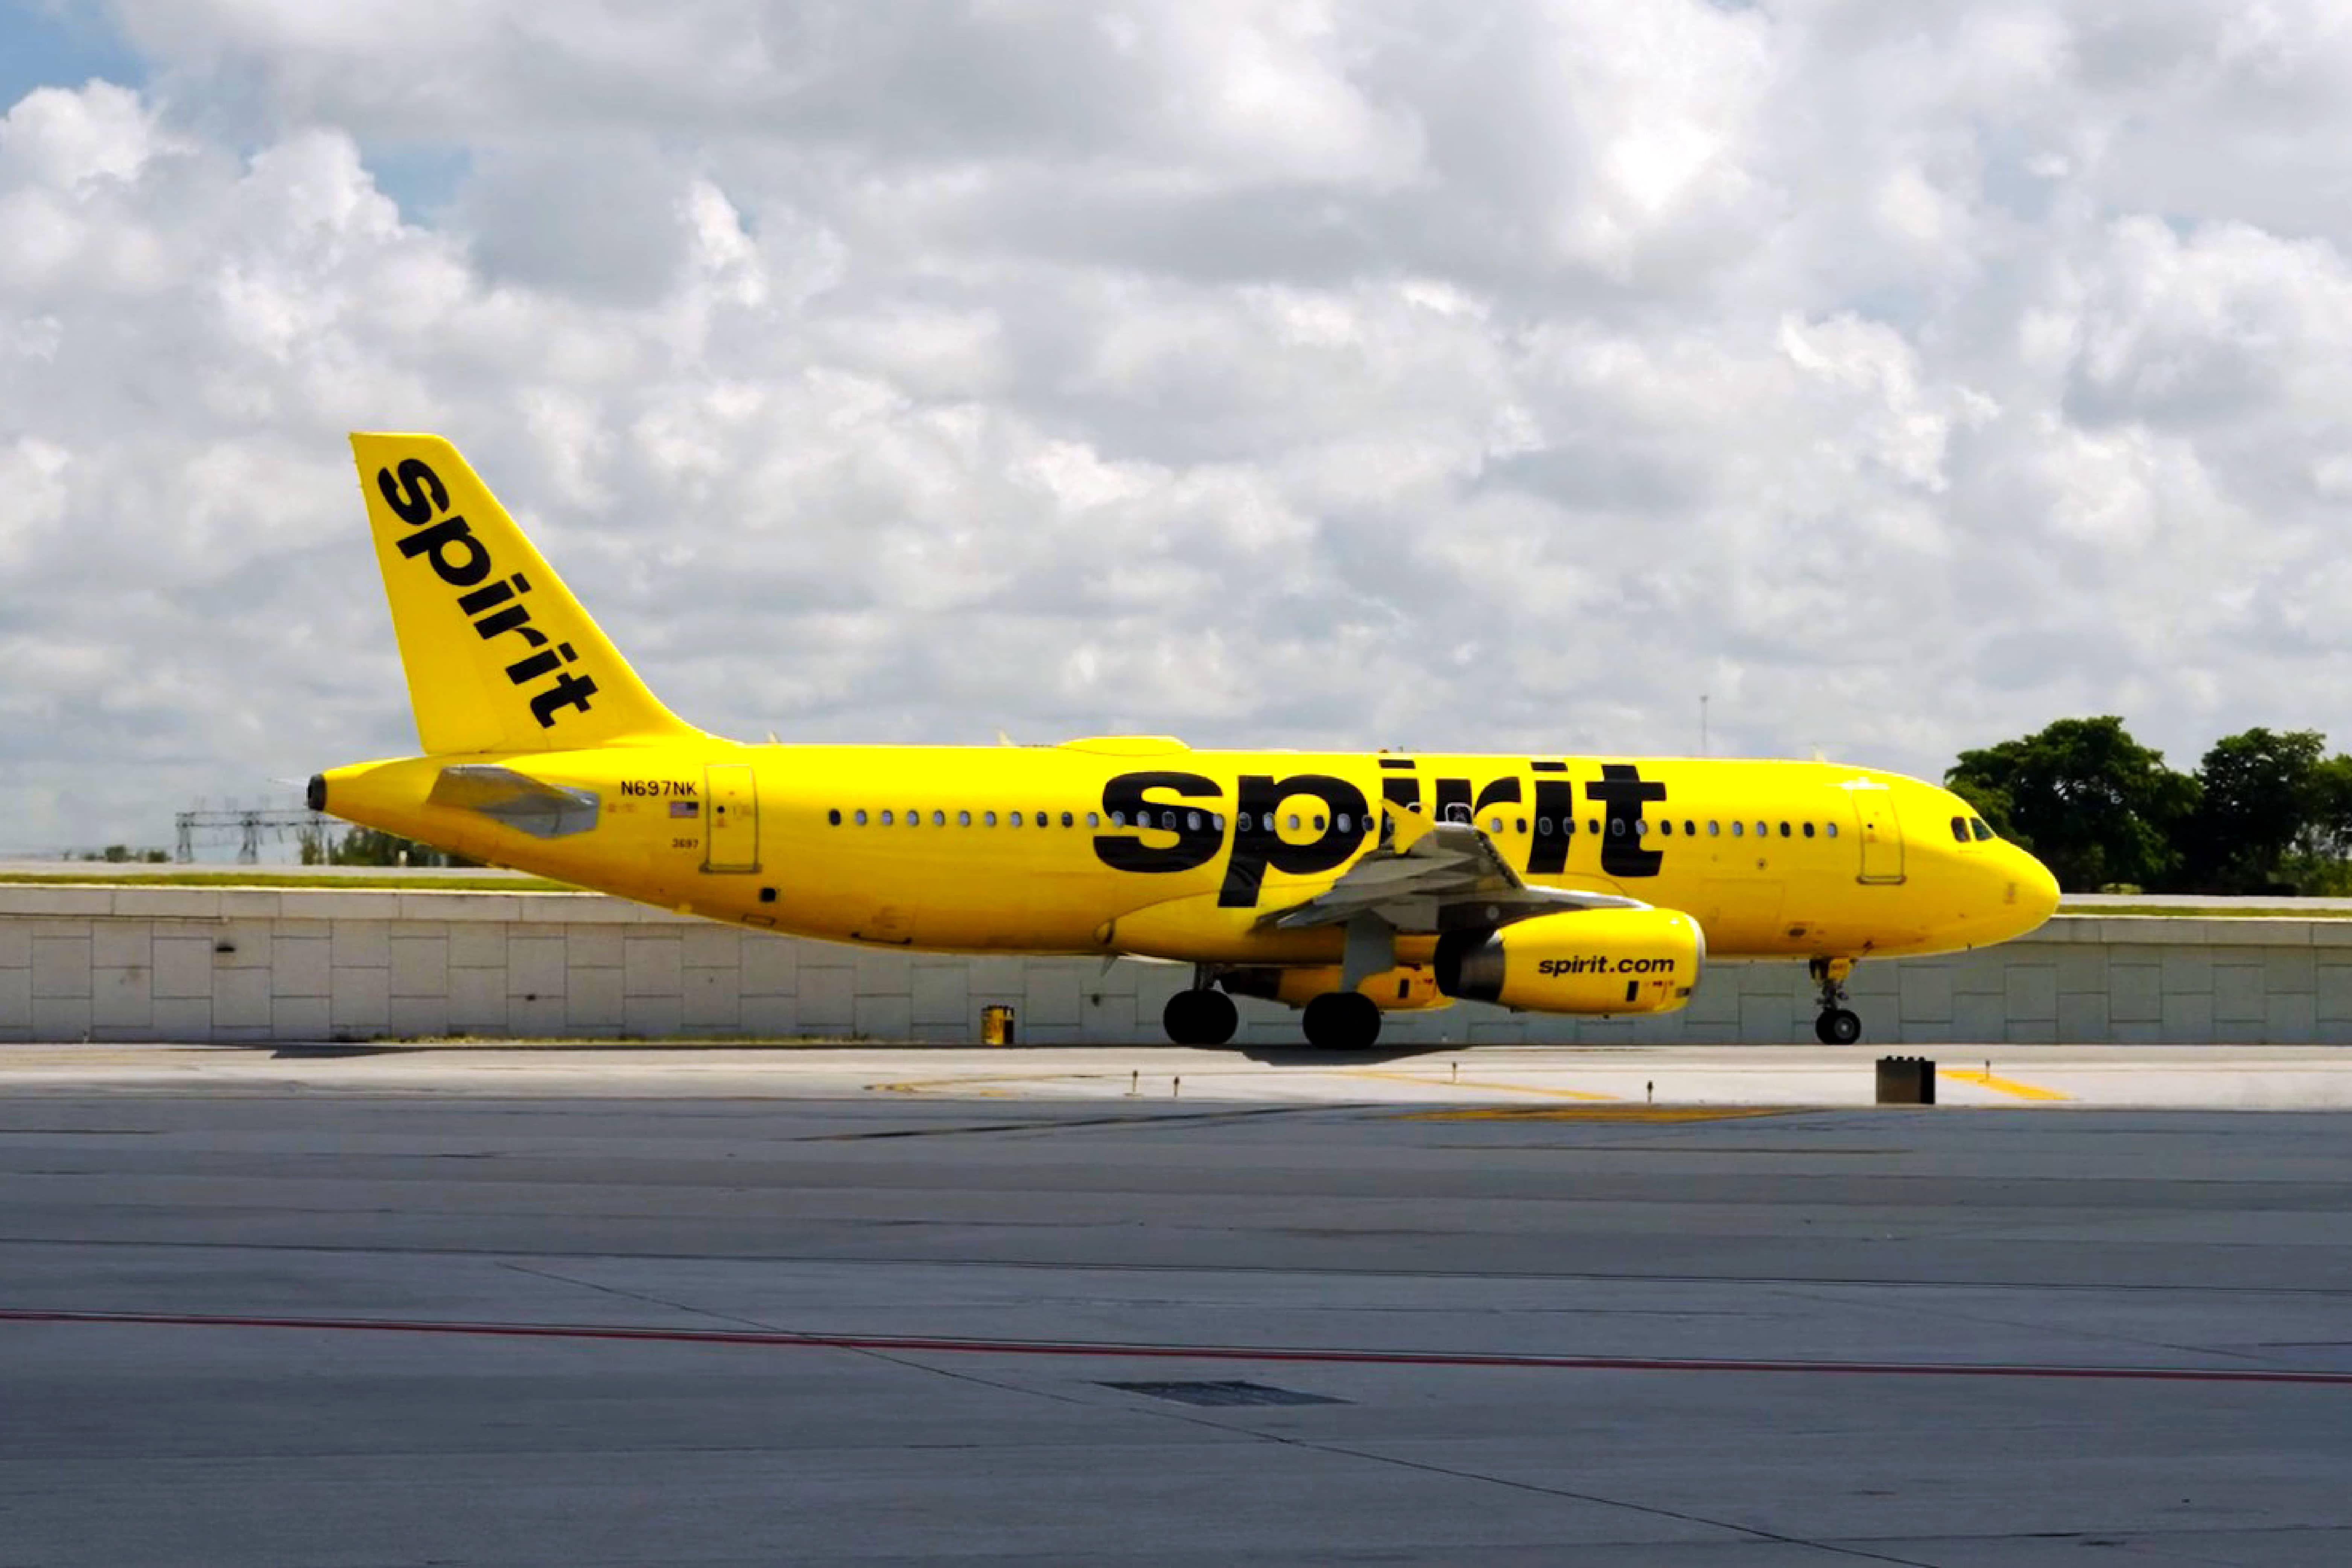 Spirit Airlines aircraft